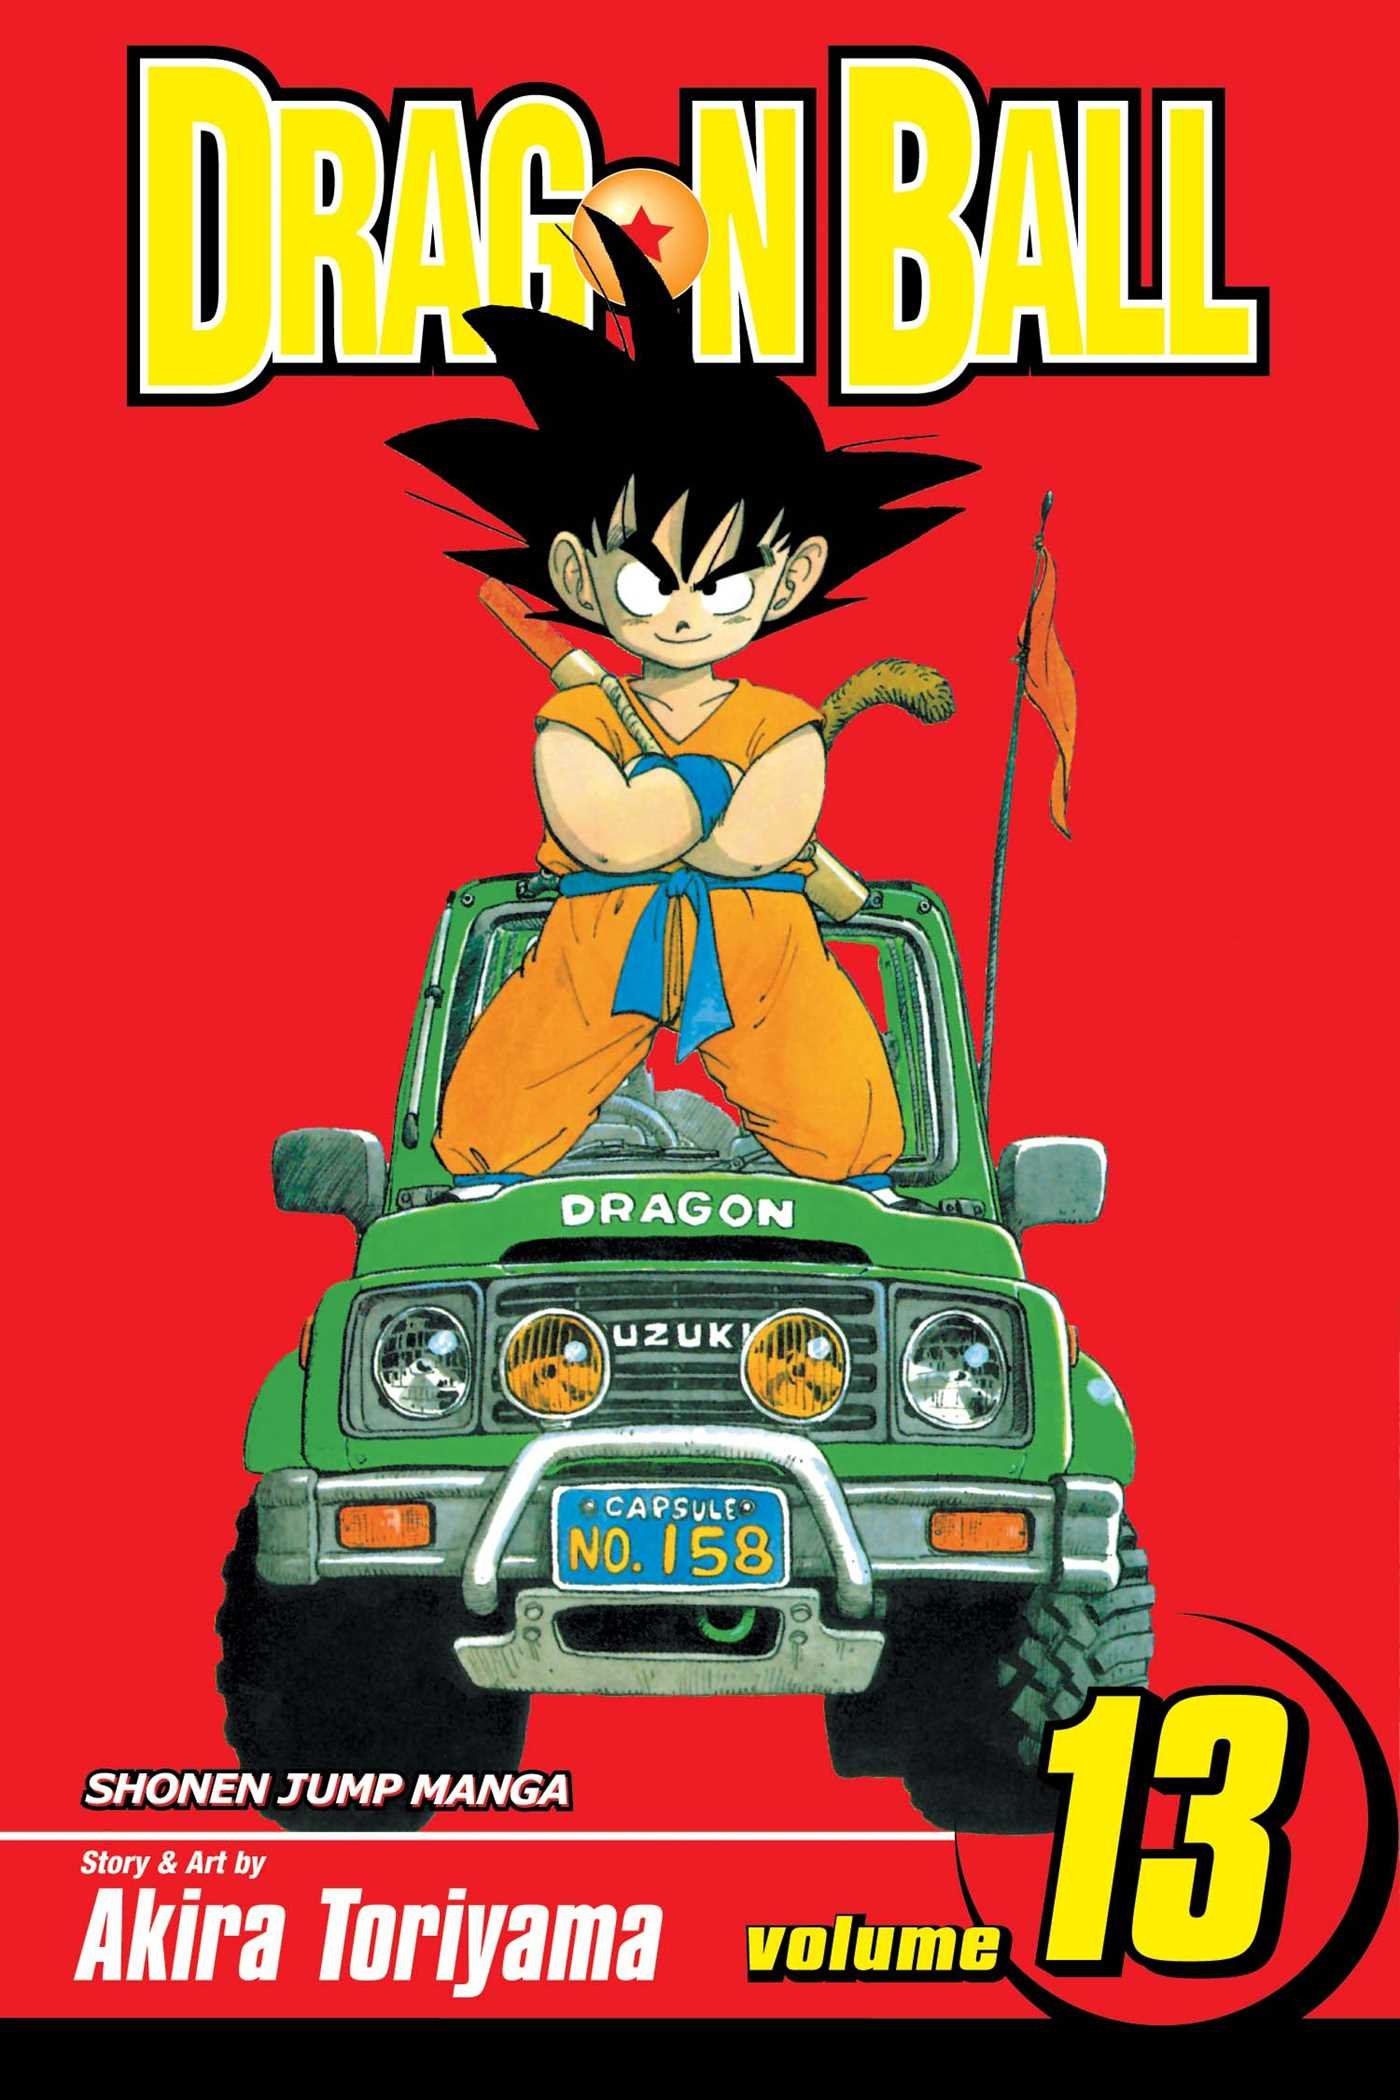 Vezi detalii pentru Dragon Ball Vol. 13 | Akira Toriyama